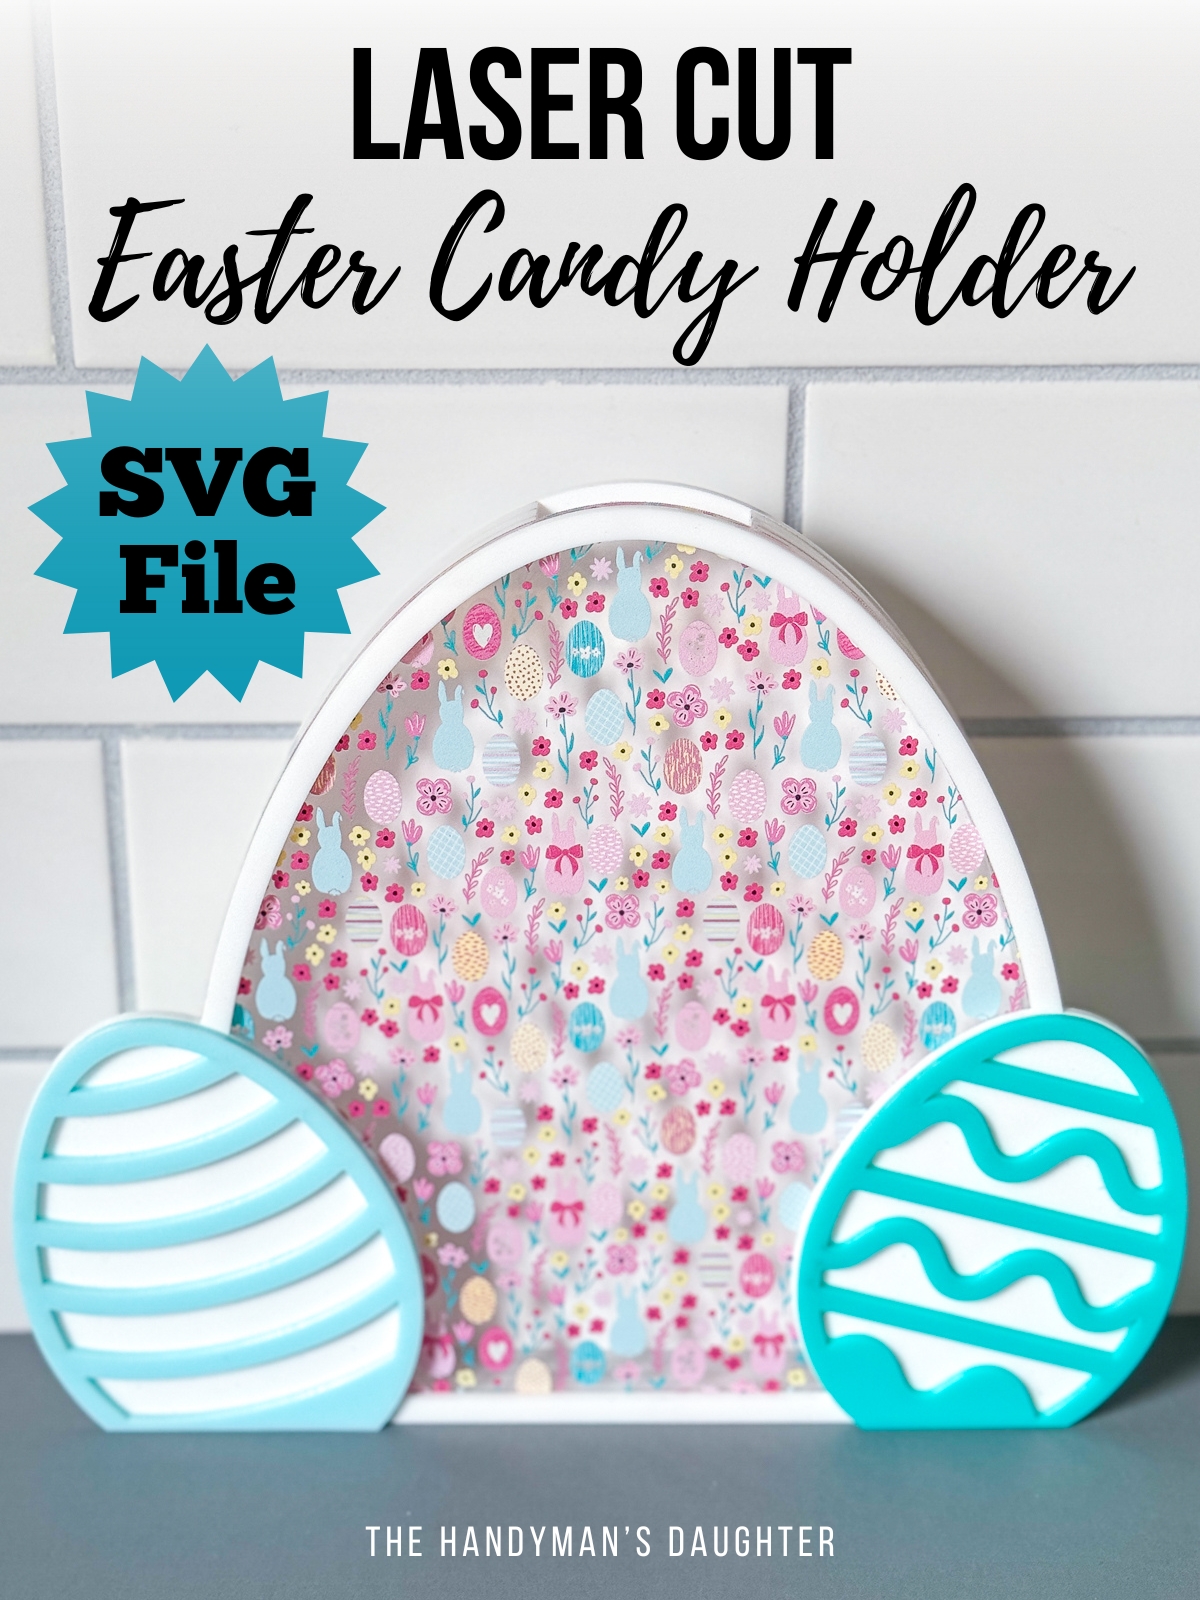 laser cut Easter Candy Holder with SVG file